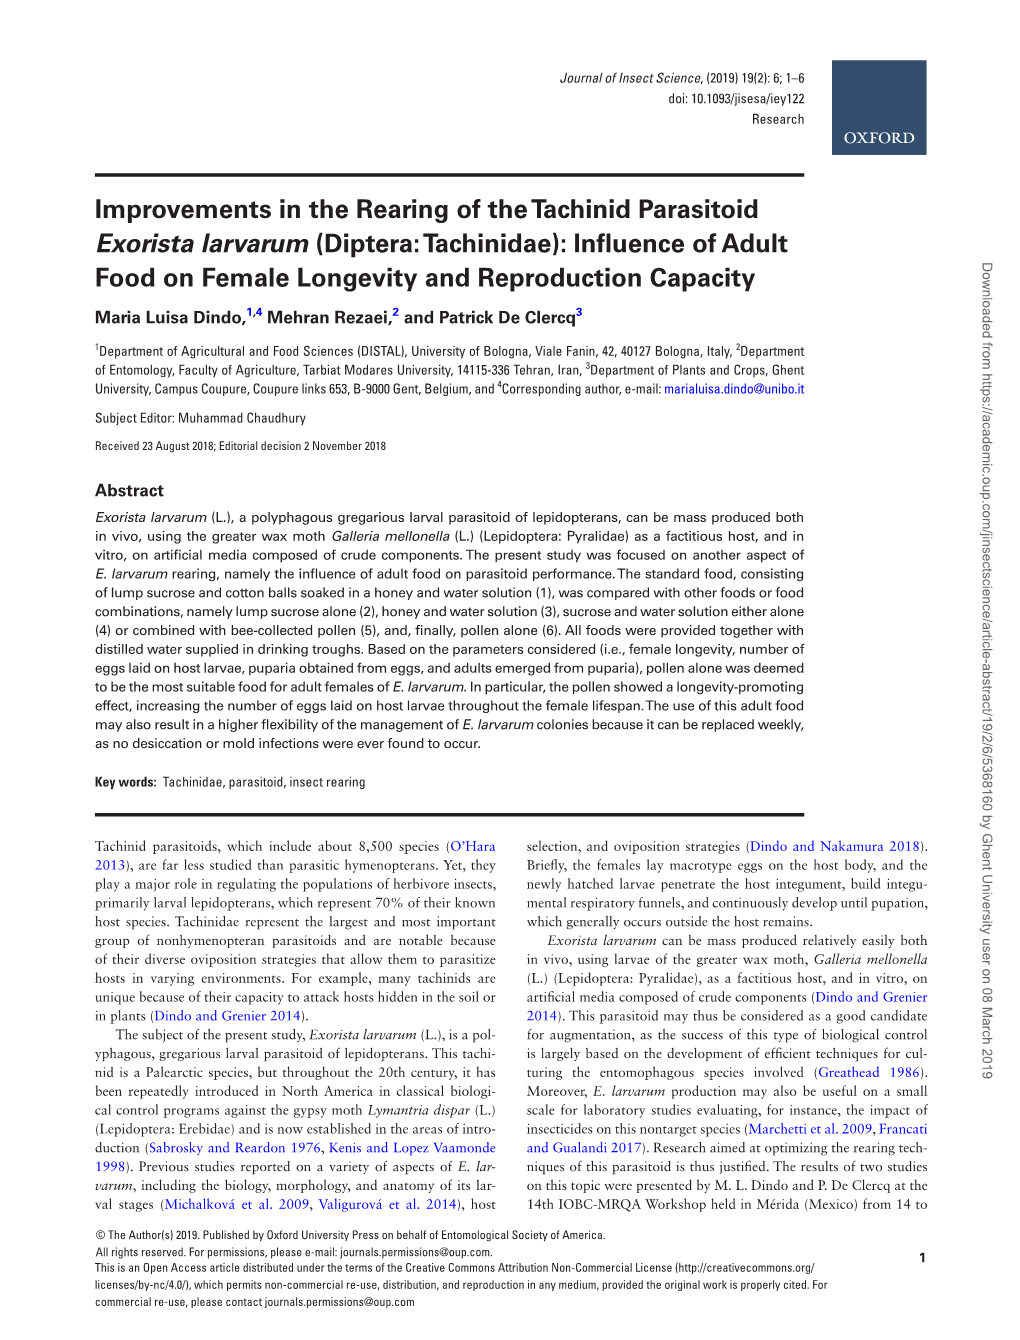 Improvements in the Rearing of the Tachinid Parasitoid Exorista Larvarum